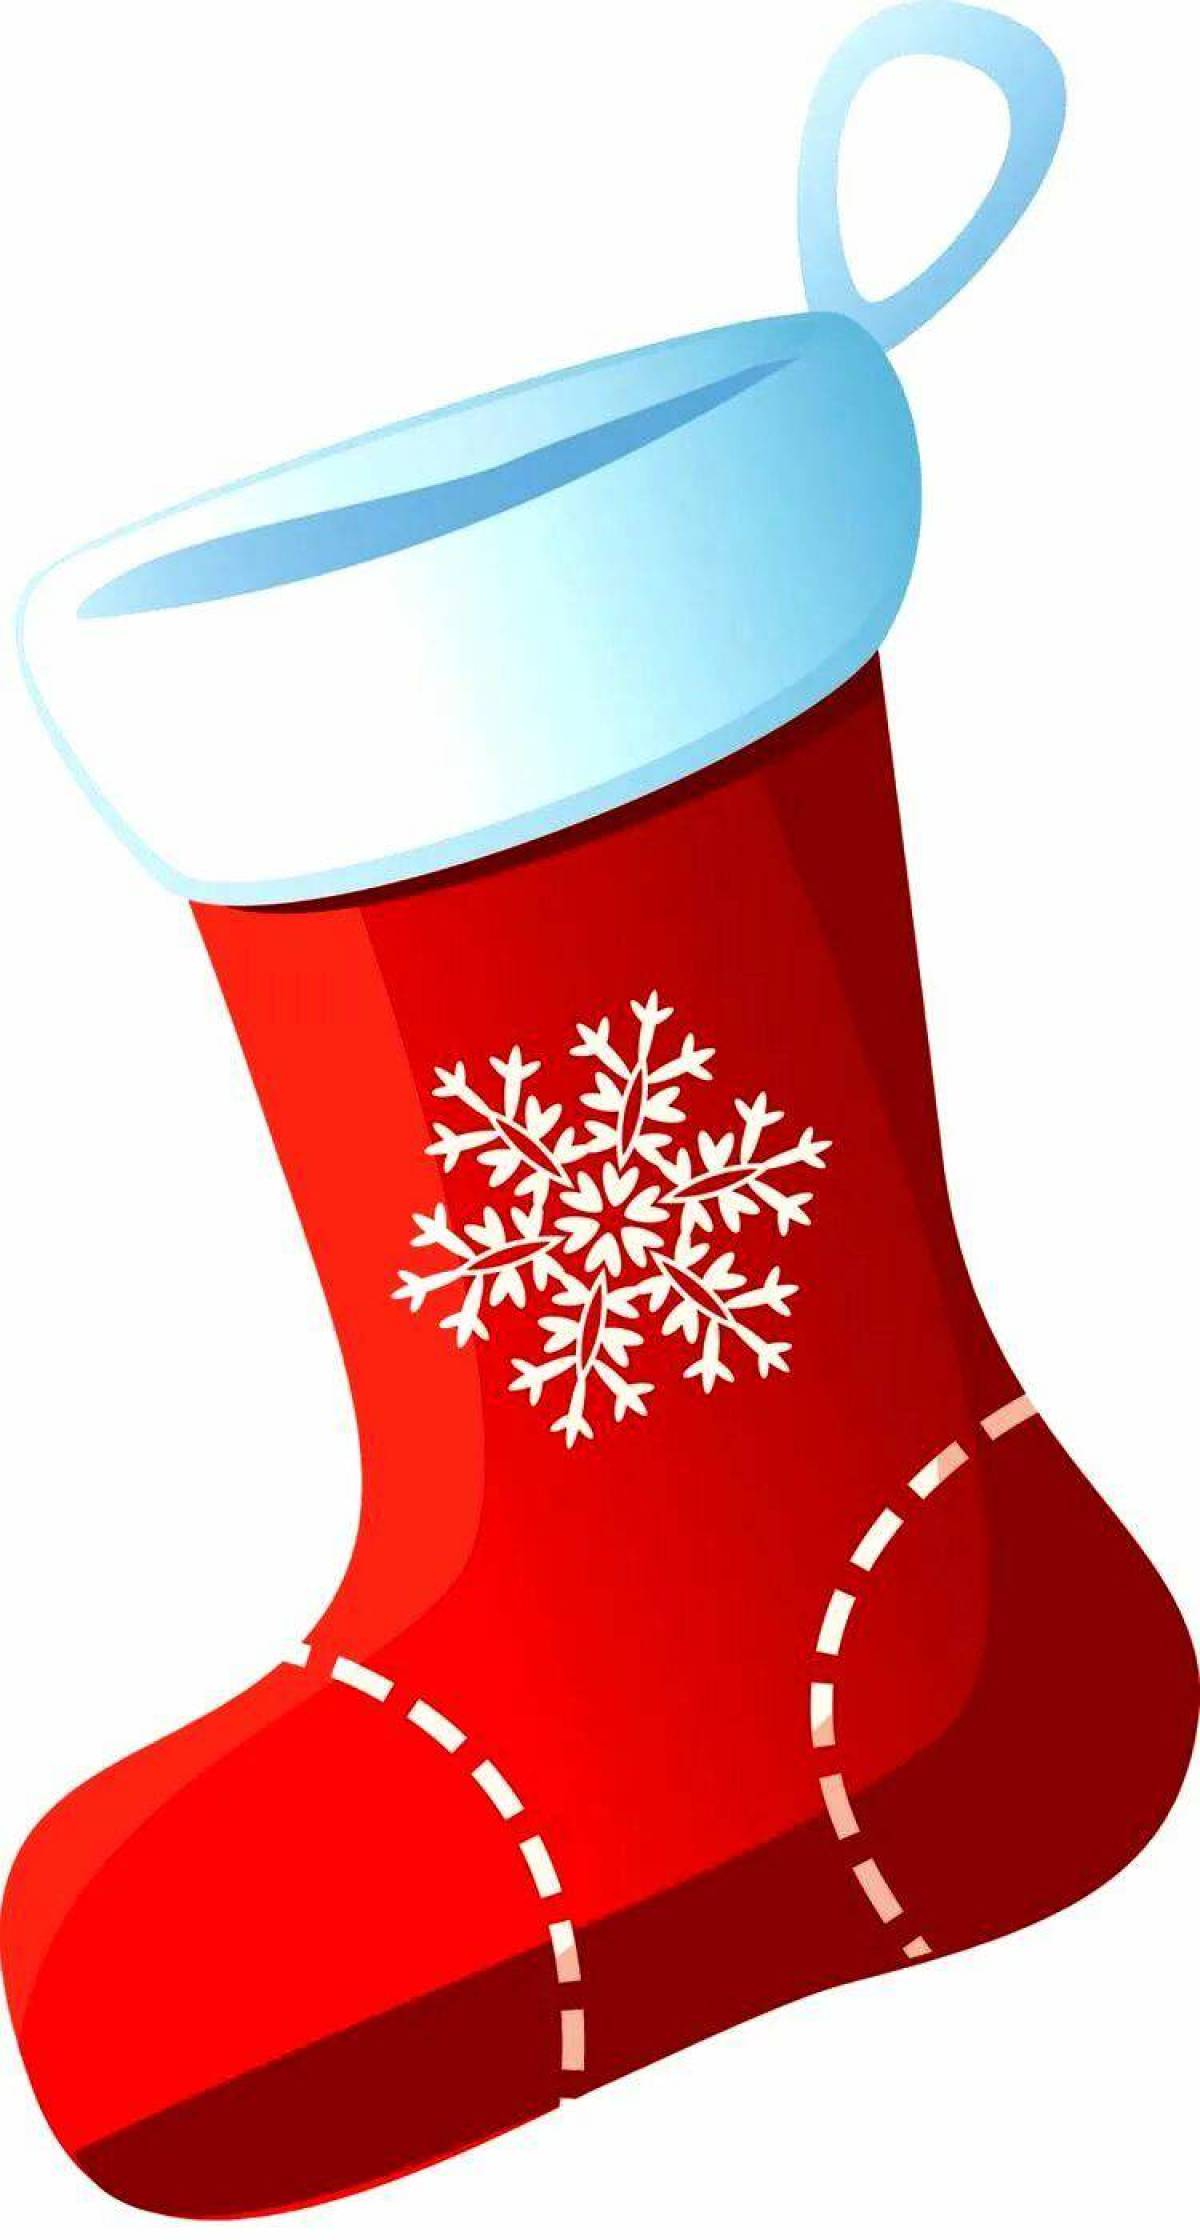 Раскраска Рождественский носок со снежинками | Раскраски, Снежинки, Подарки